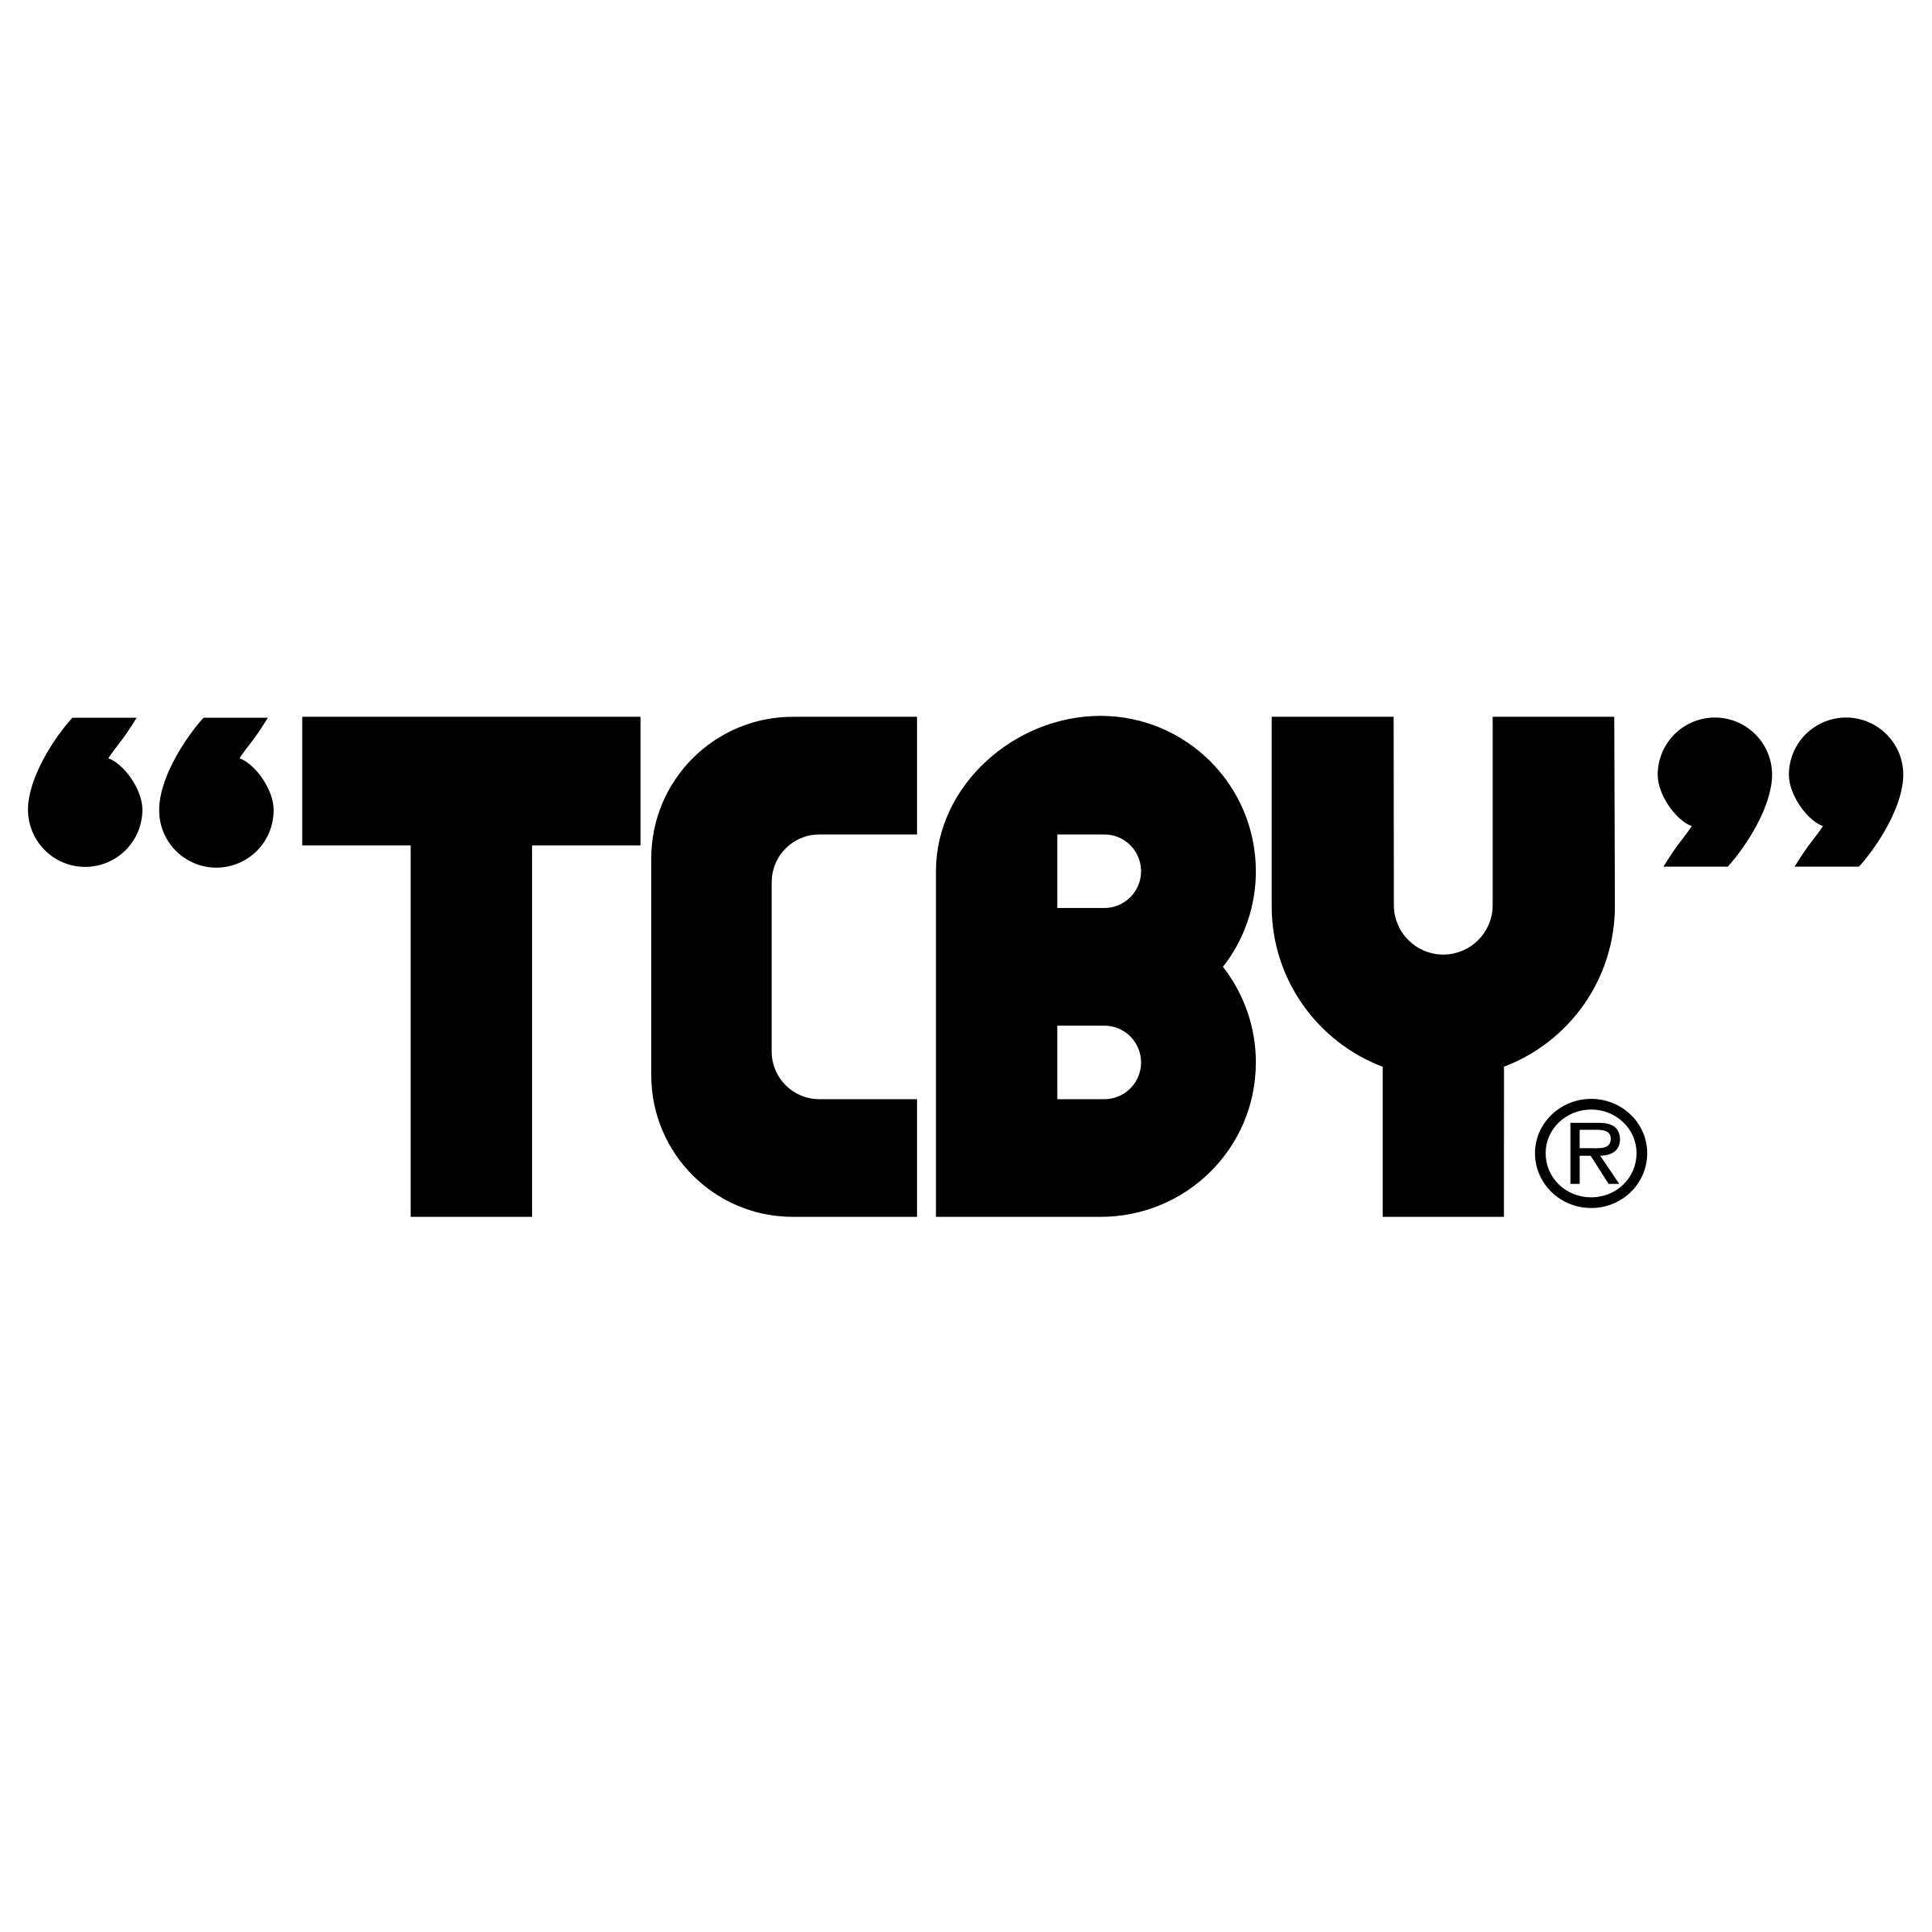 TCBY Logo - TCBY Logo PNG Transparent & SVG Vector - Freebie Supply